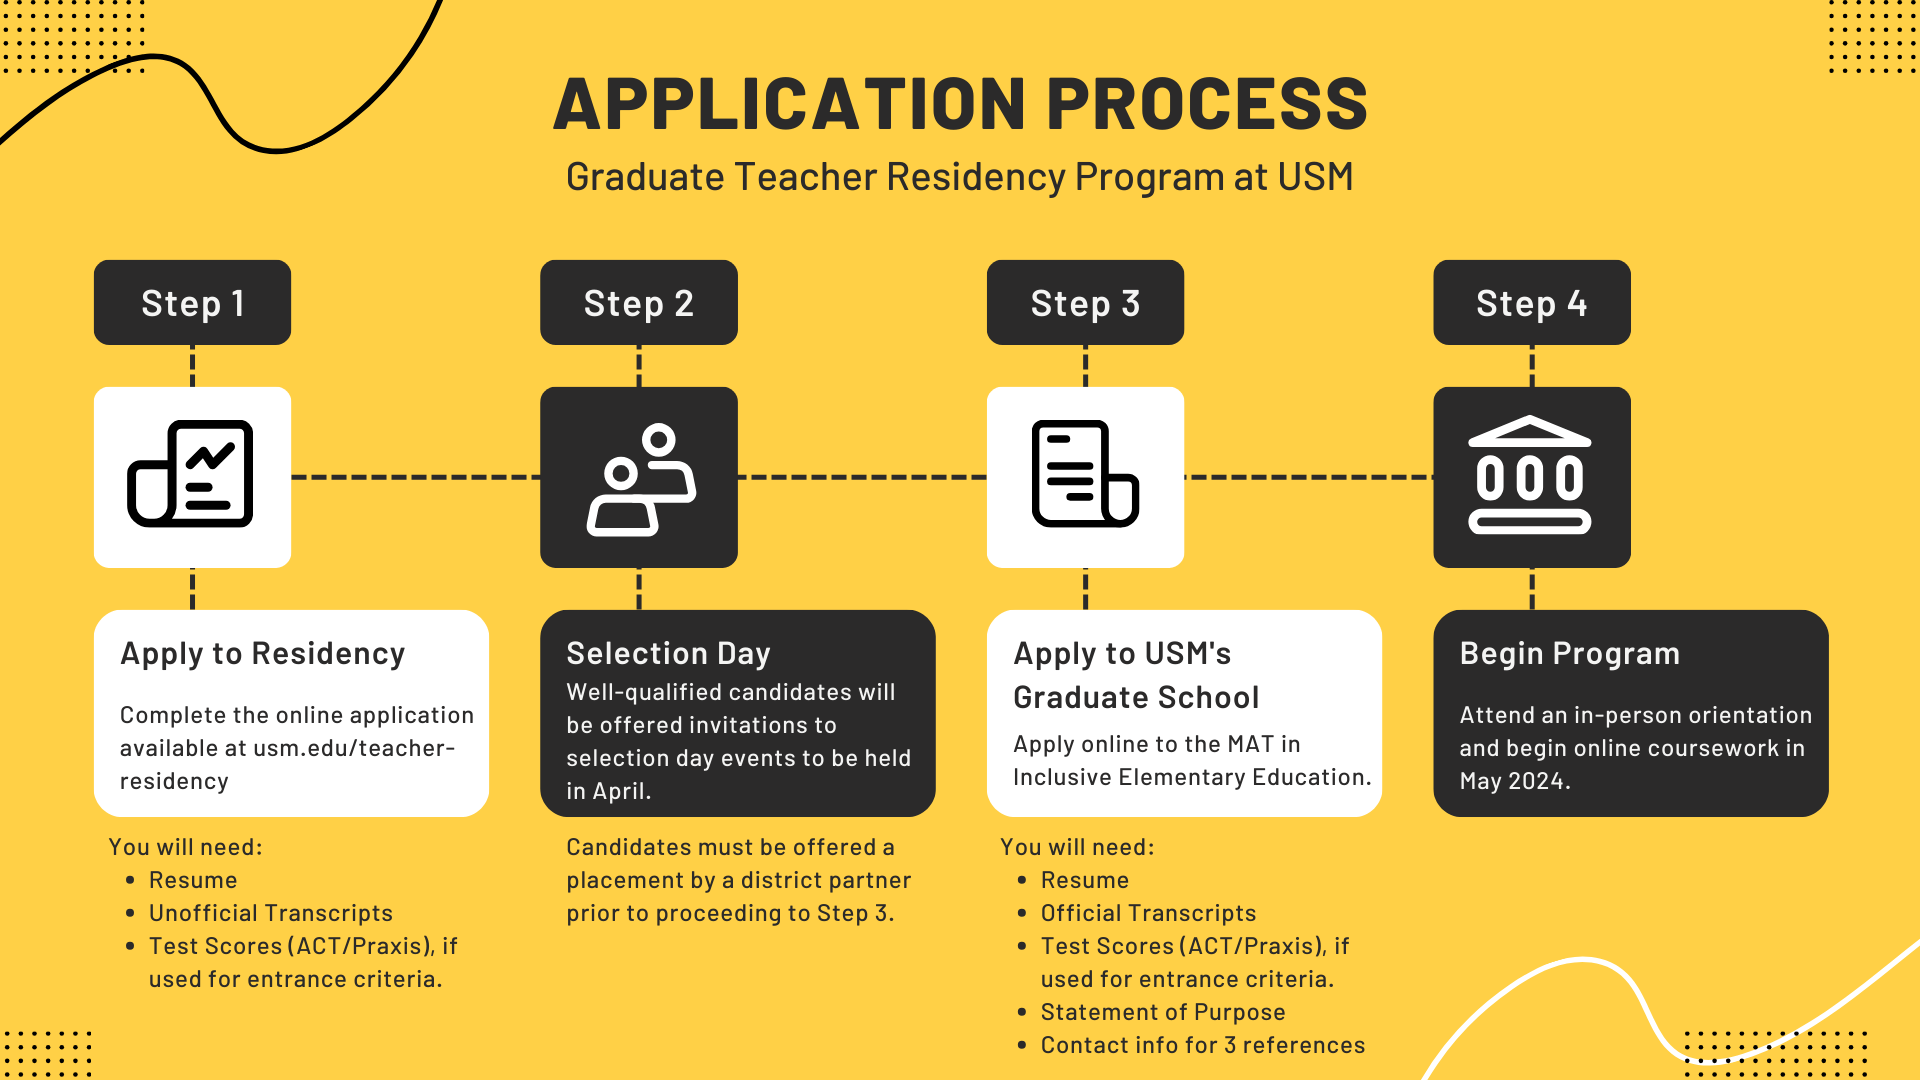 Graduate Teacher Residency Application Timeline